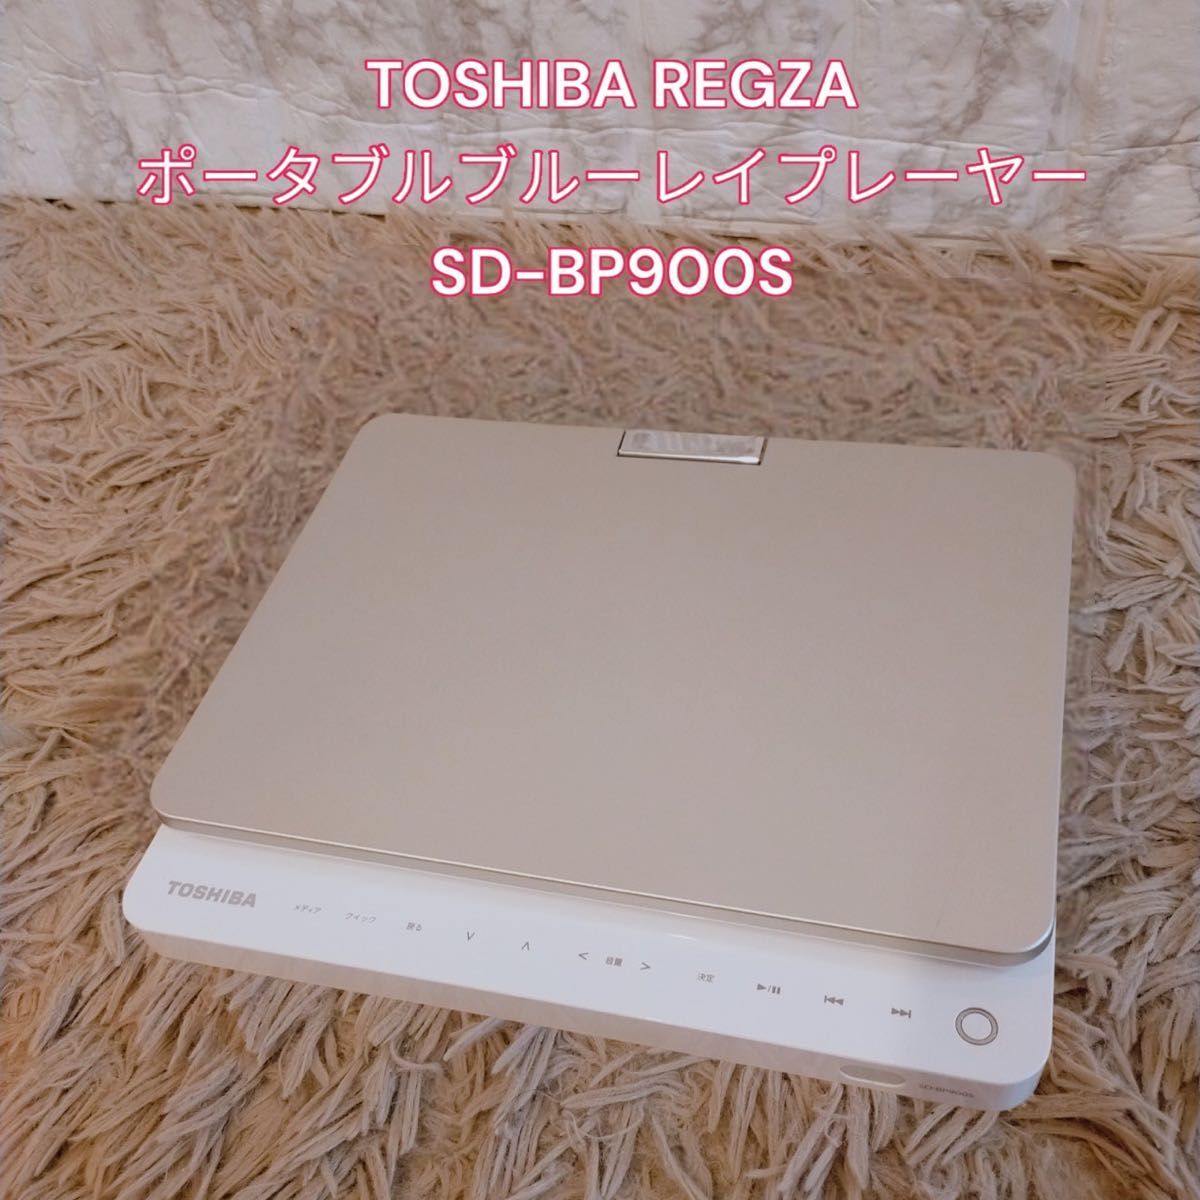 TOSHIBA REGZA ポータブルブルーレイプレーヤー SD-BP900S